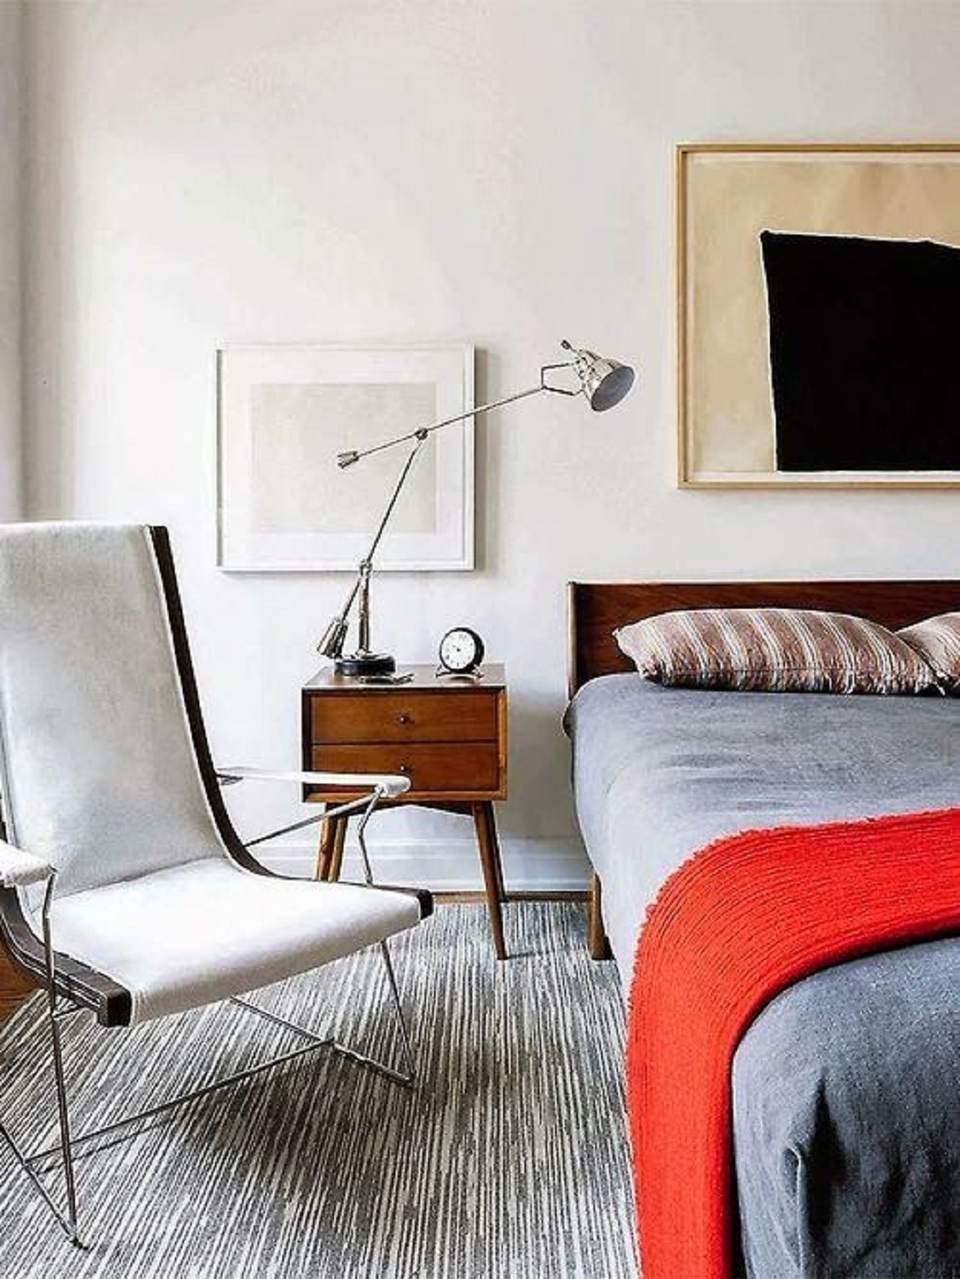 10 Fashionable Mid Century Modern Bedroom Ideas midcentury modern bedroom decorating ideas 1 2022